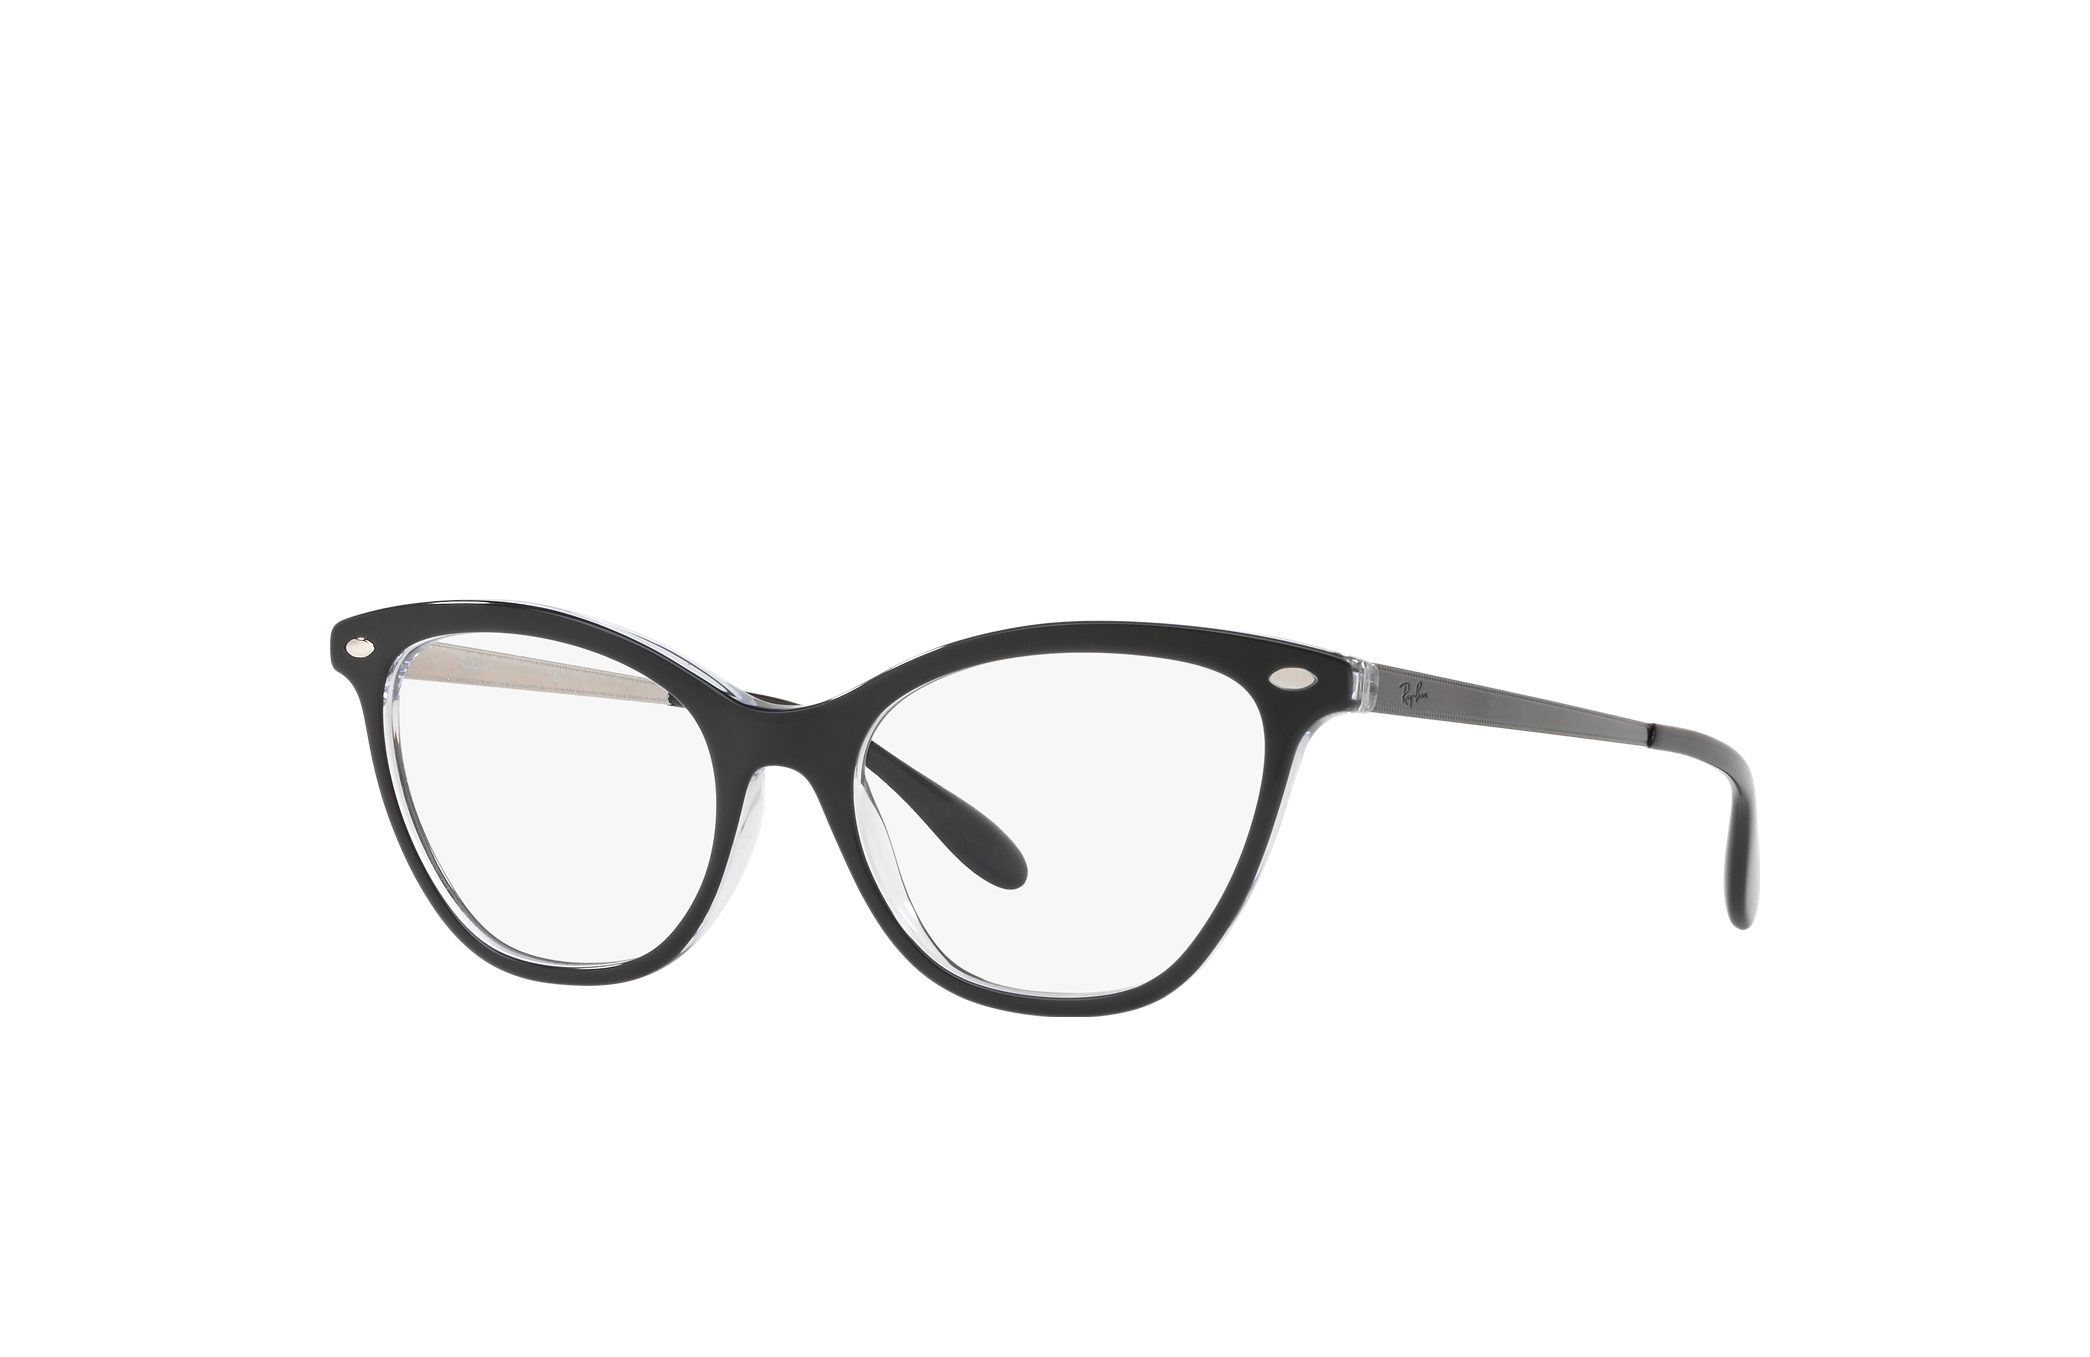 Rb5360f Eyeglasses with Black Frame - RB5360F | Ray-Ban®